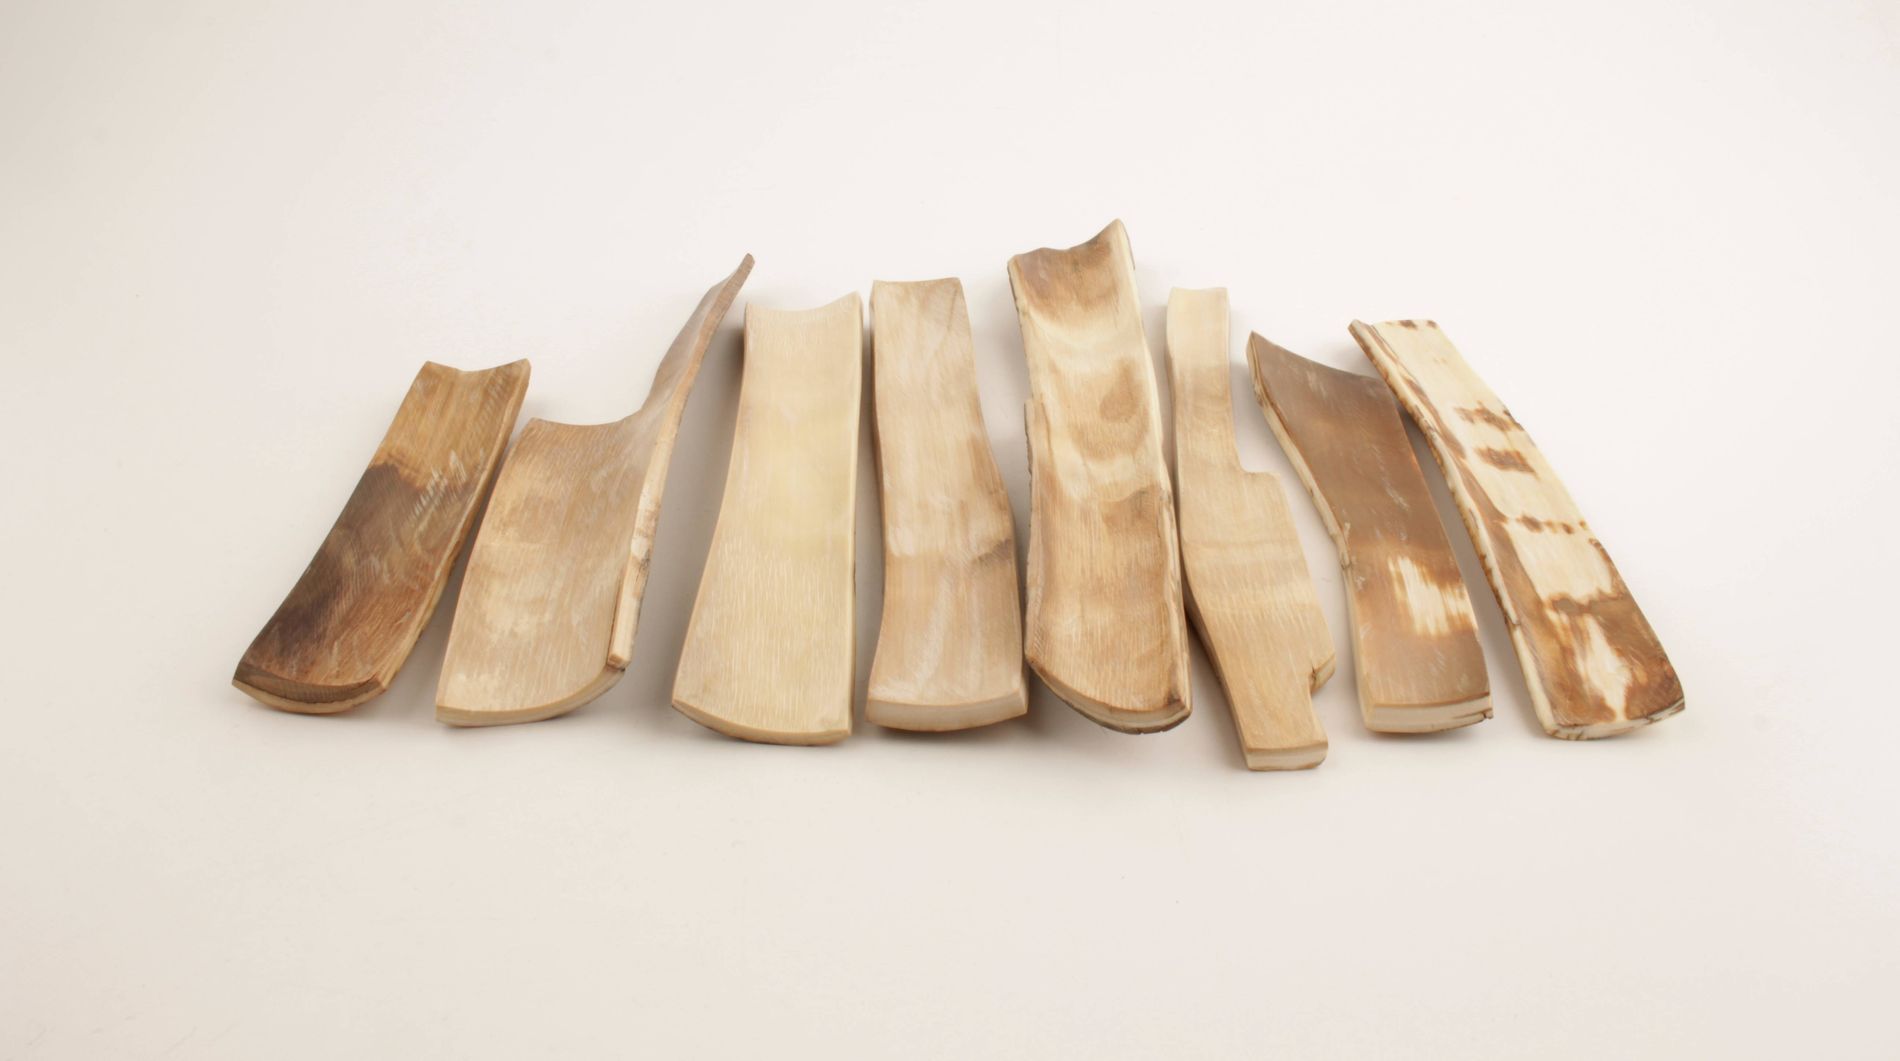 Natural mammoth bark pieces